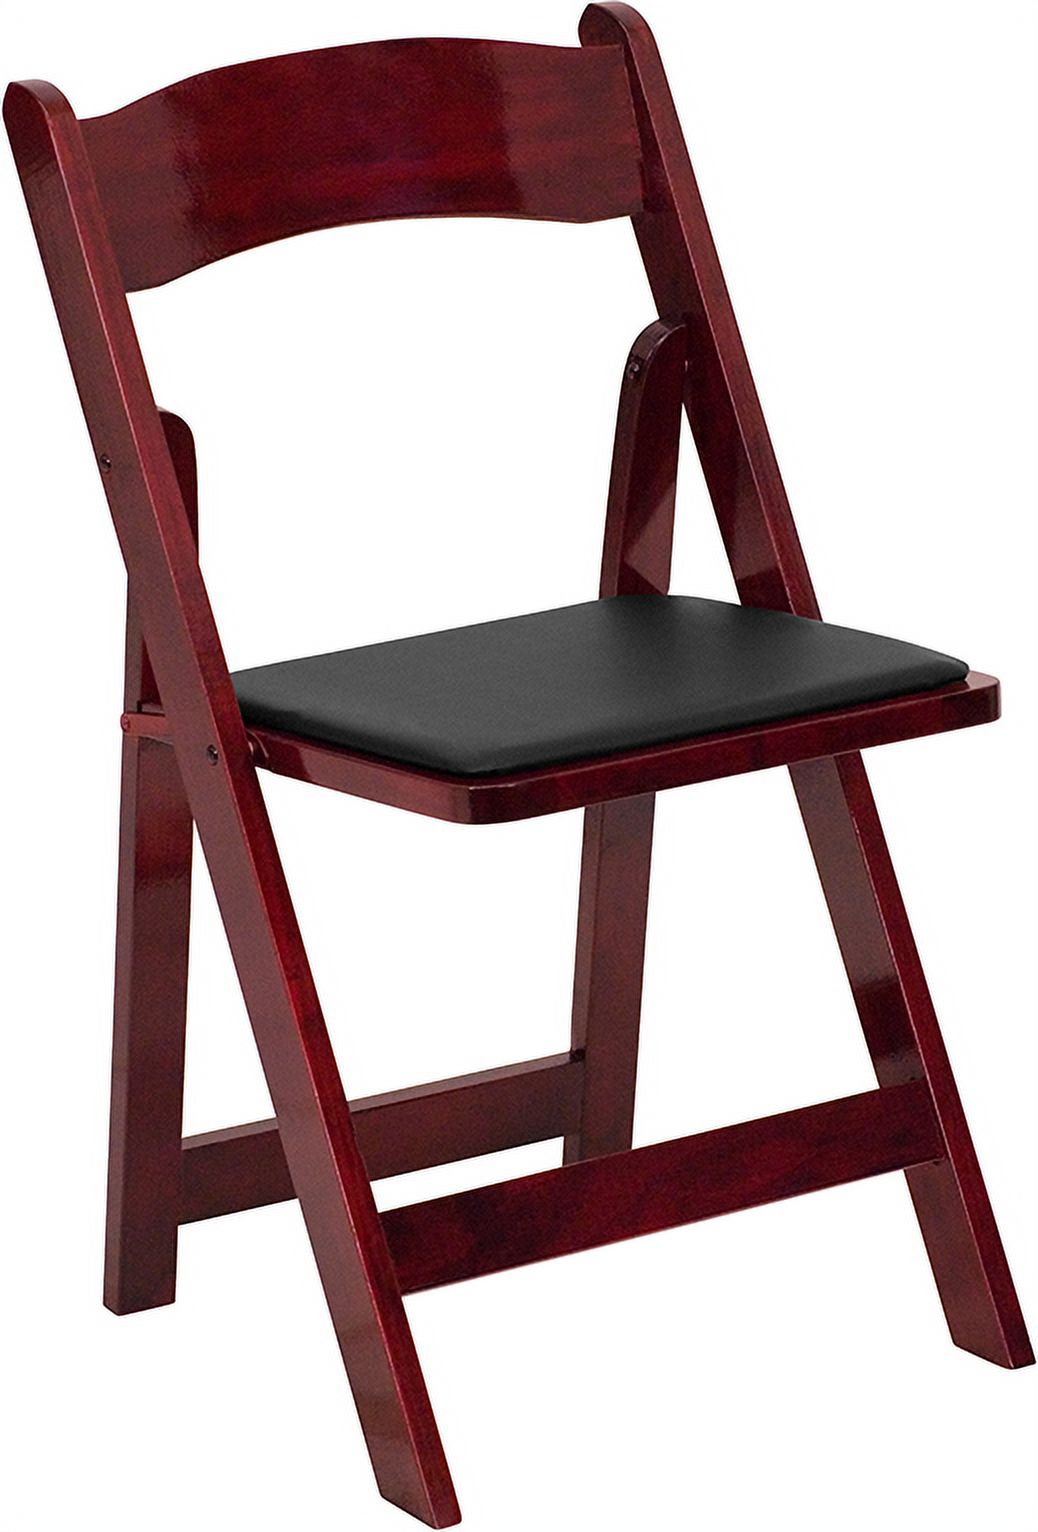 Flash Furniture HERCULES Series Mahogany Wood Folding Chair with Vinyl Padded Seat [XF-2903-MAH-WOOD-GG] - image 2 of 5